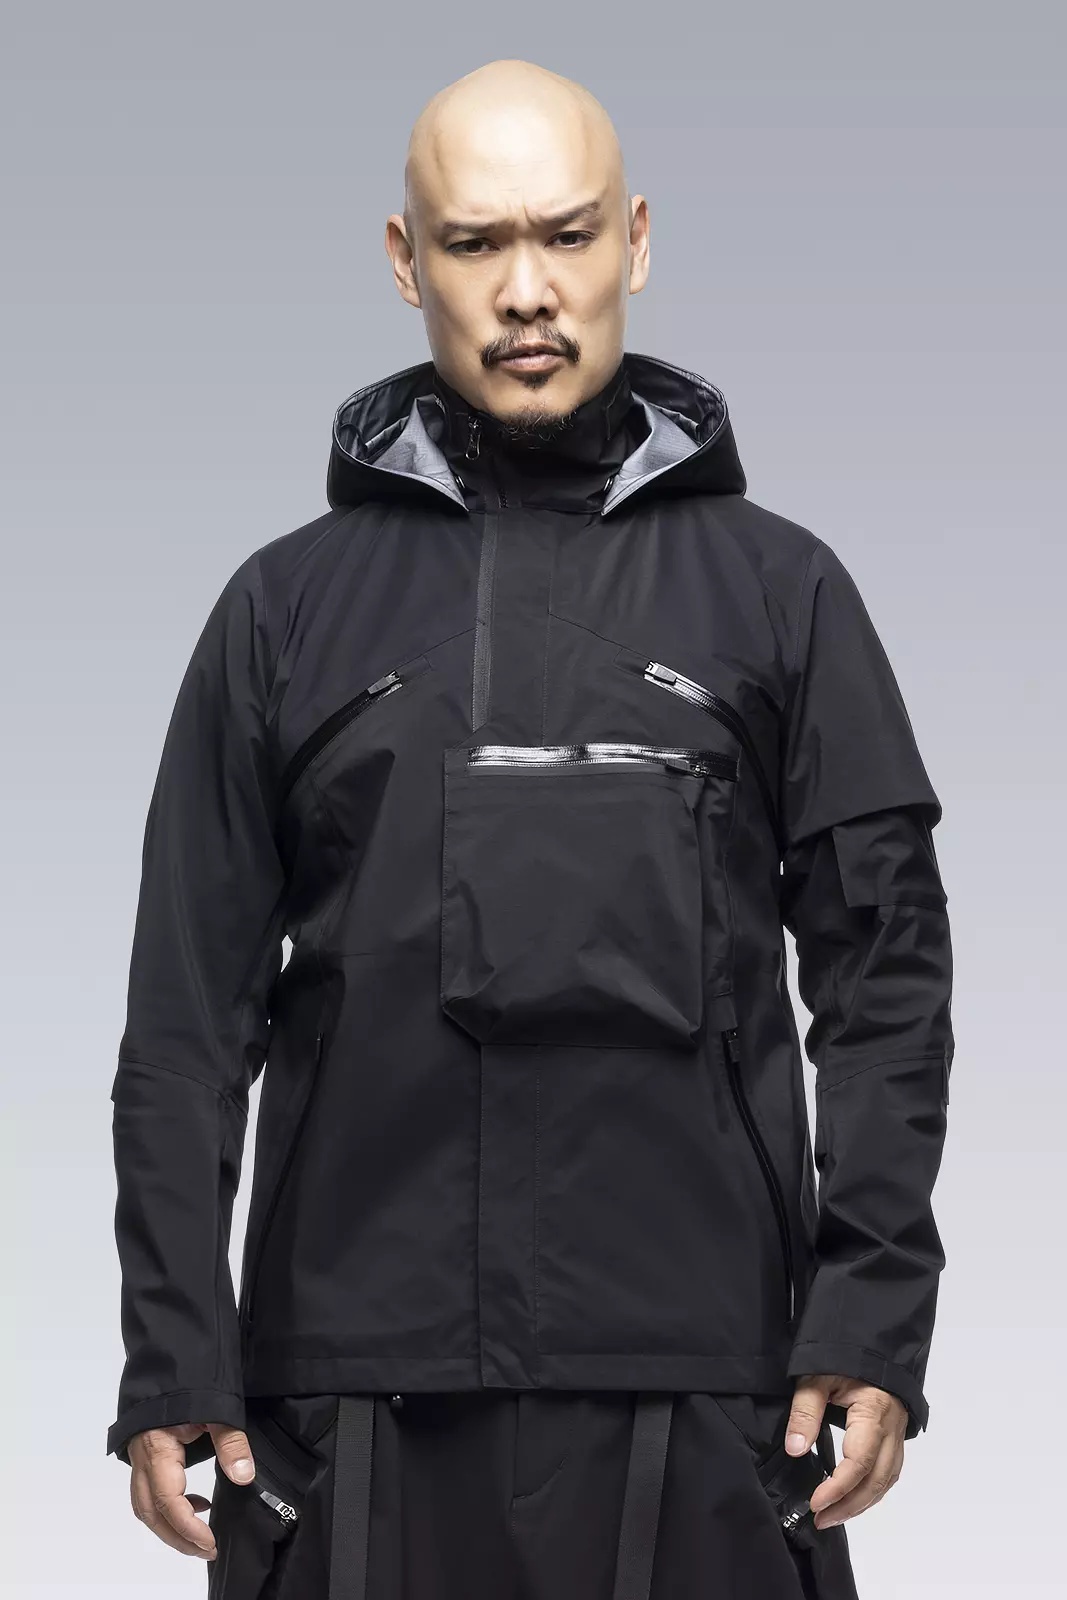 J1A-GTKR-BKS KR EX 3L Gore-Tex® Pro Interops Jacket Black with size 5 WR zippers in gloss black - 1